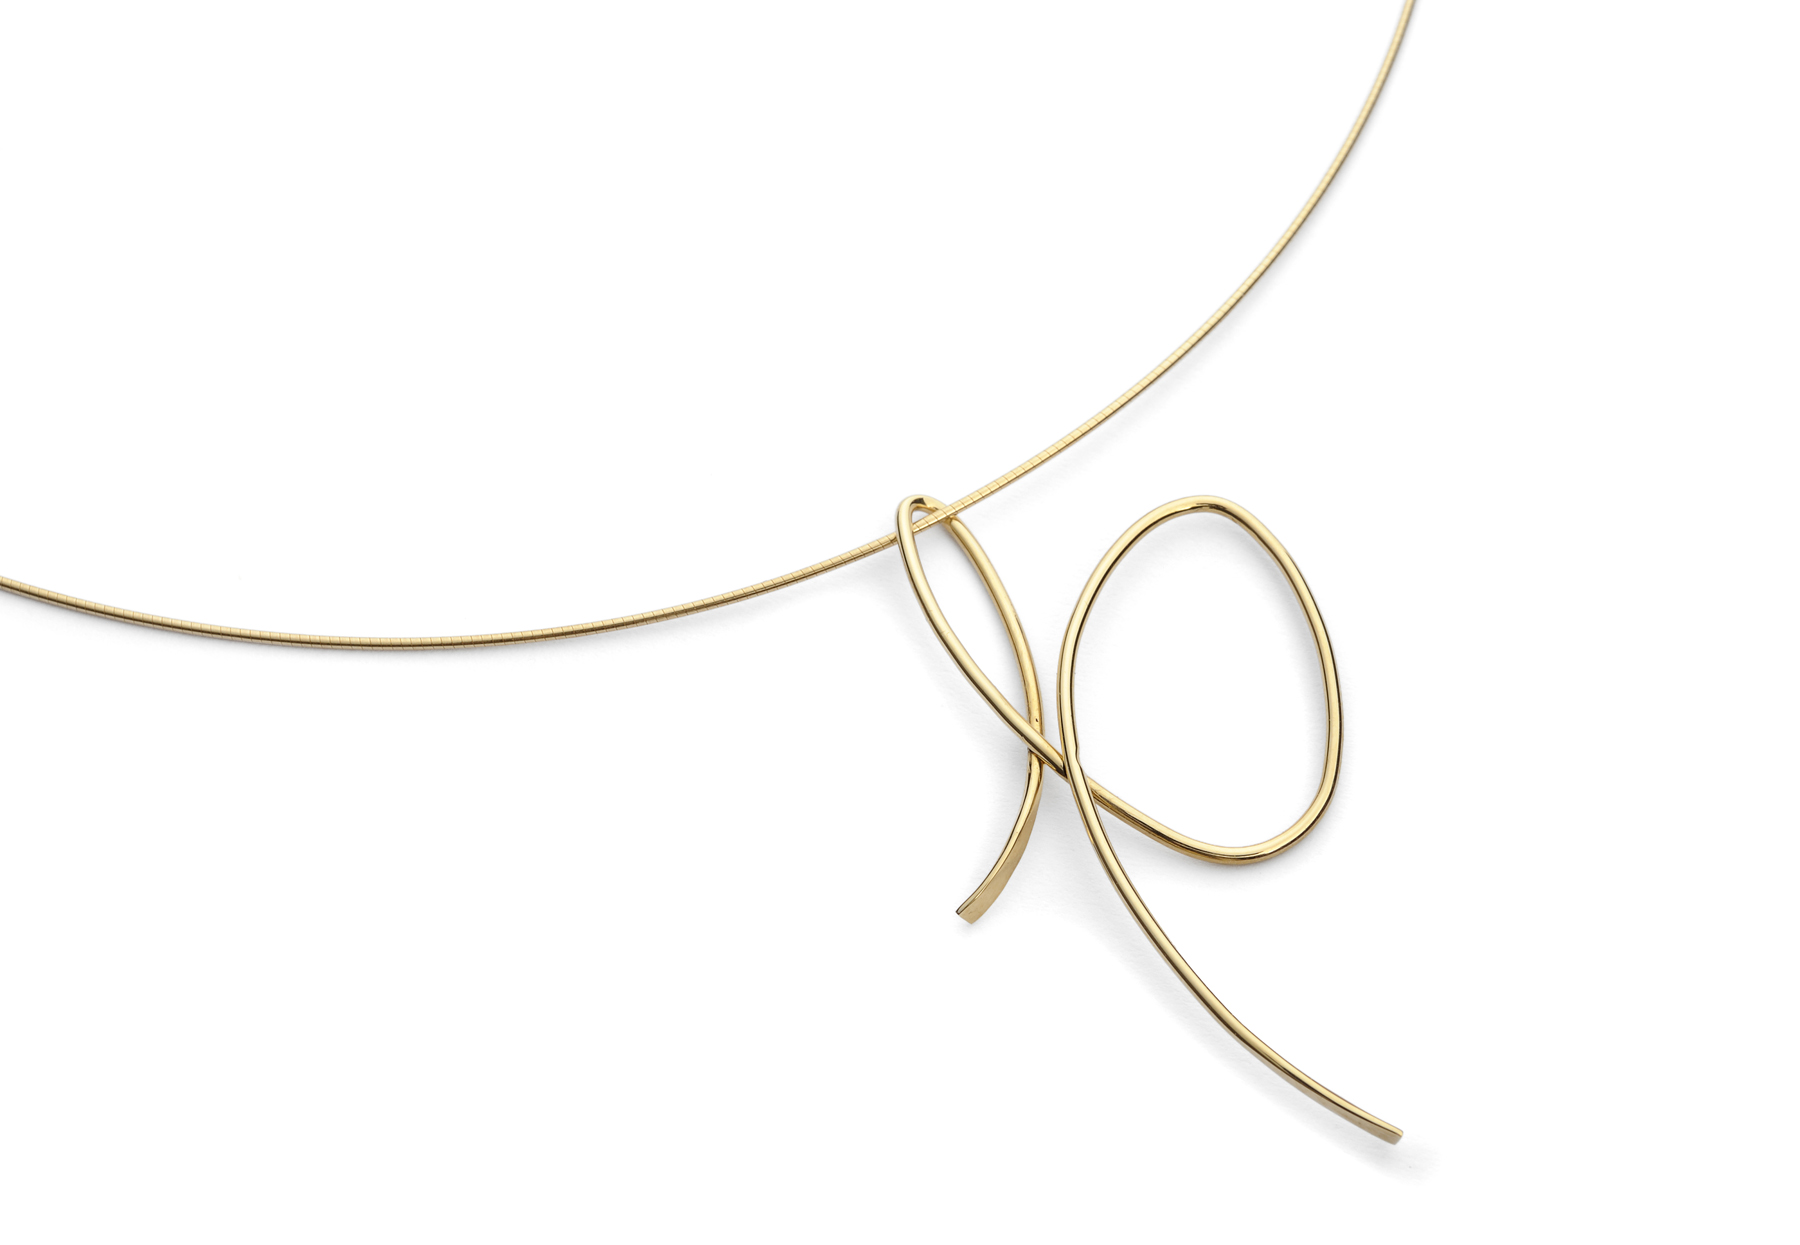 18 carat yellow gold wire loop pendant